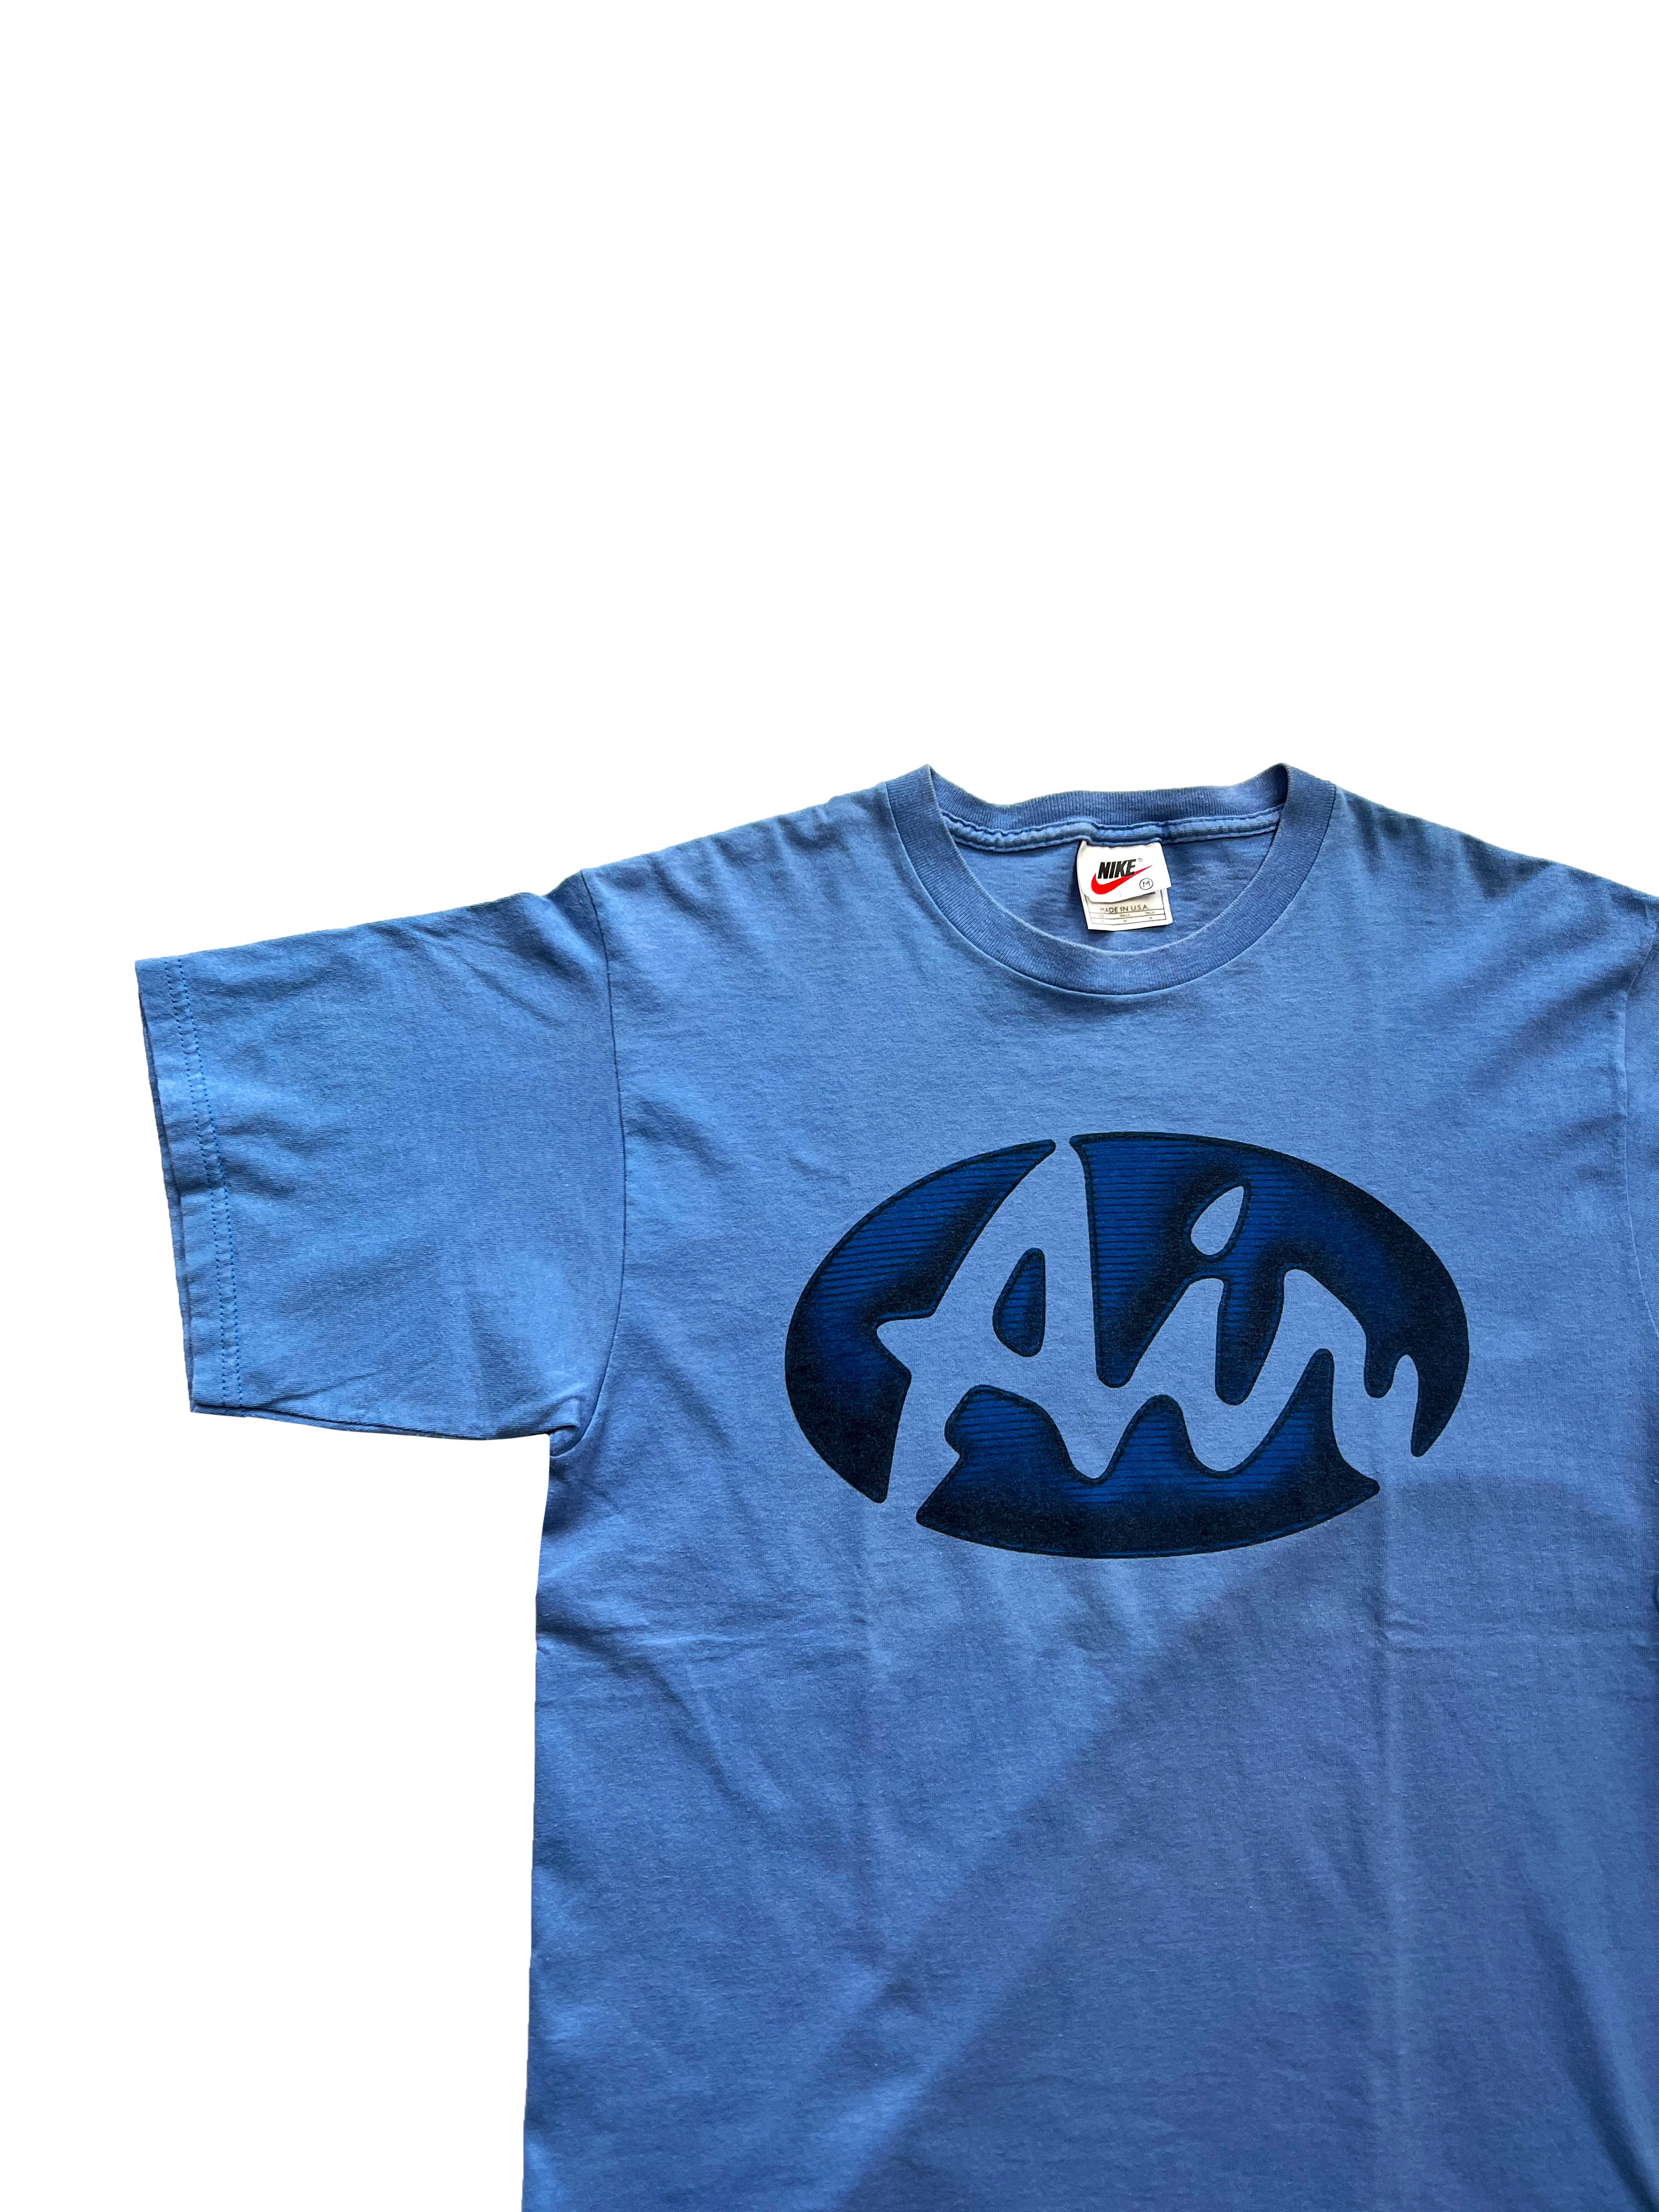 Nike Air Baby Blue T-shirt 90's